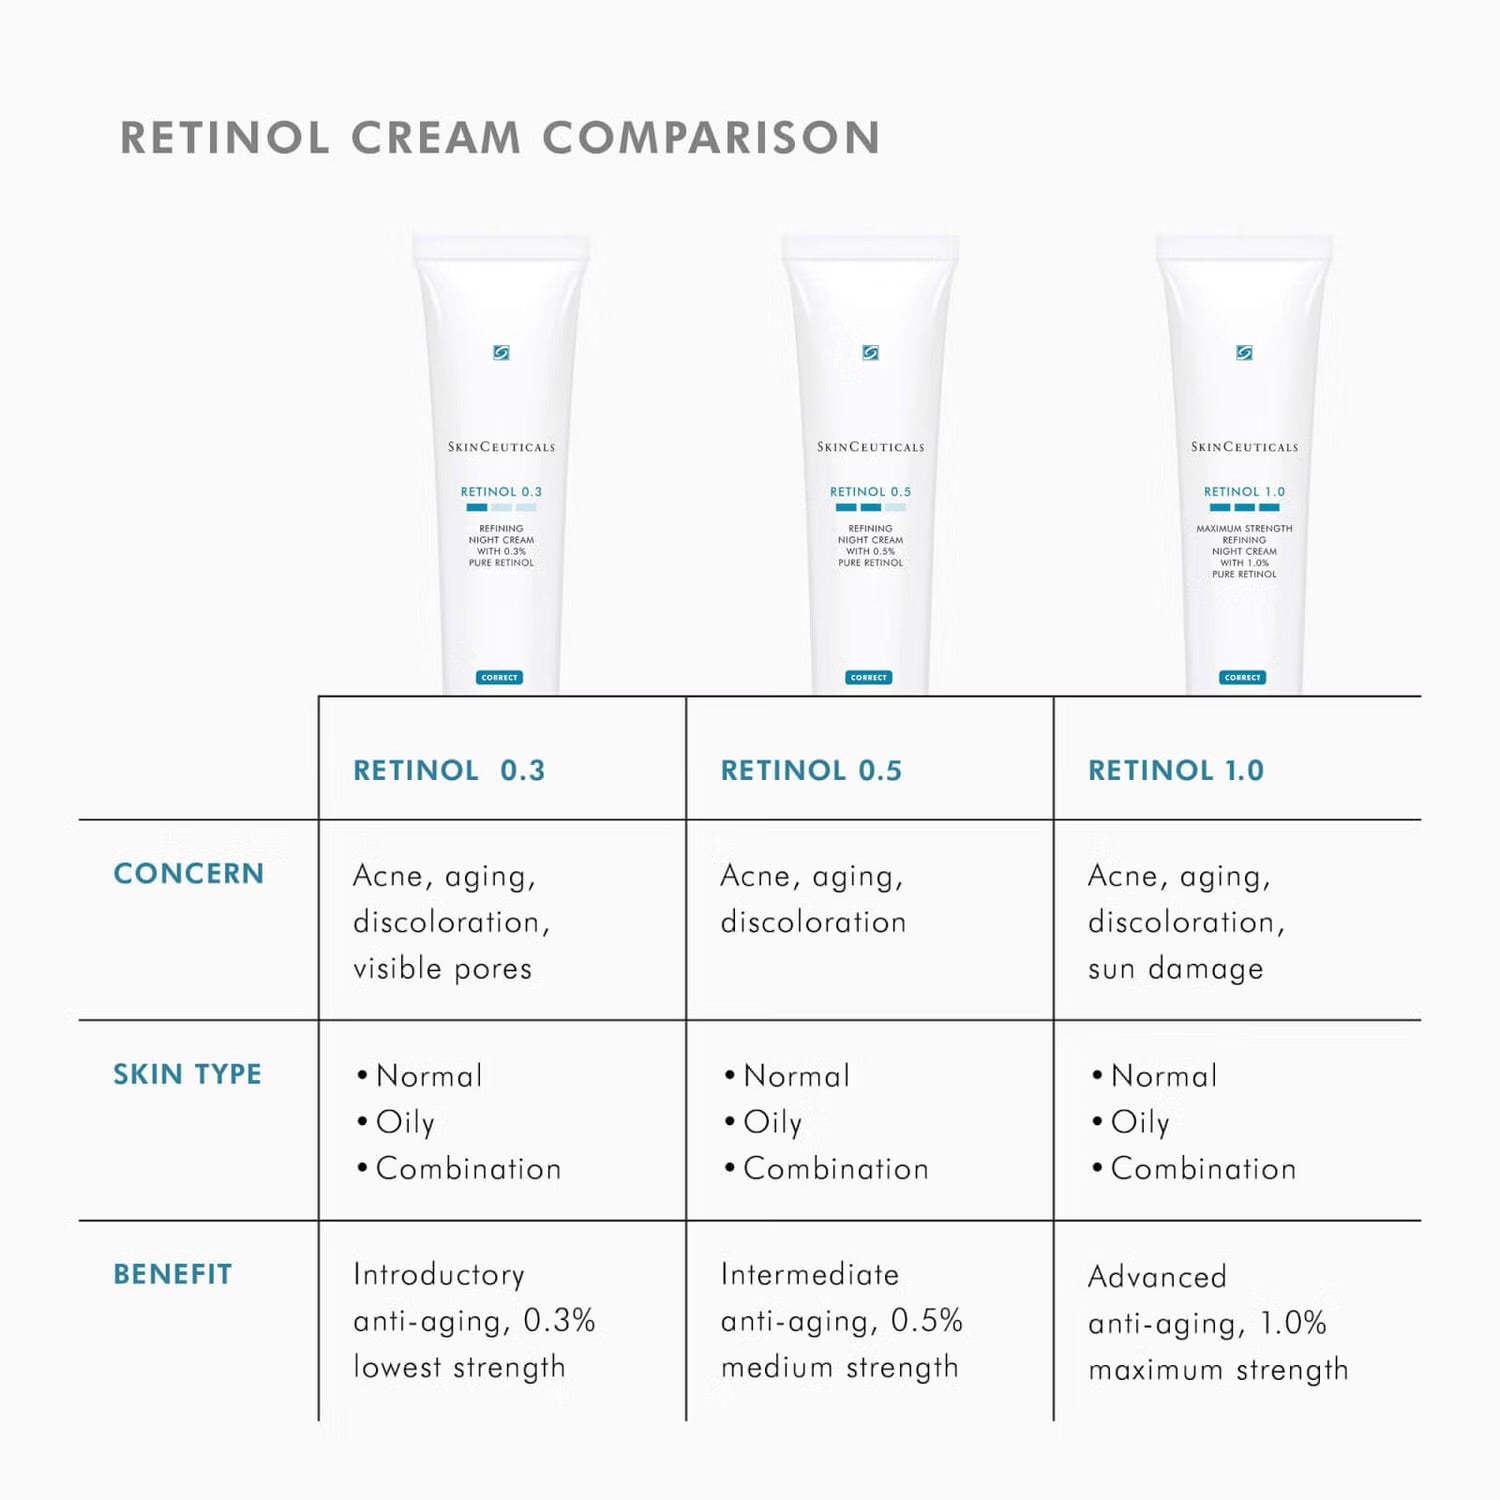 SkinCeuticals Retinol 1.0